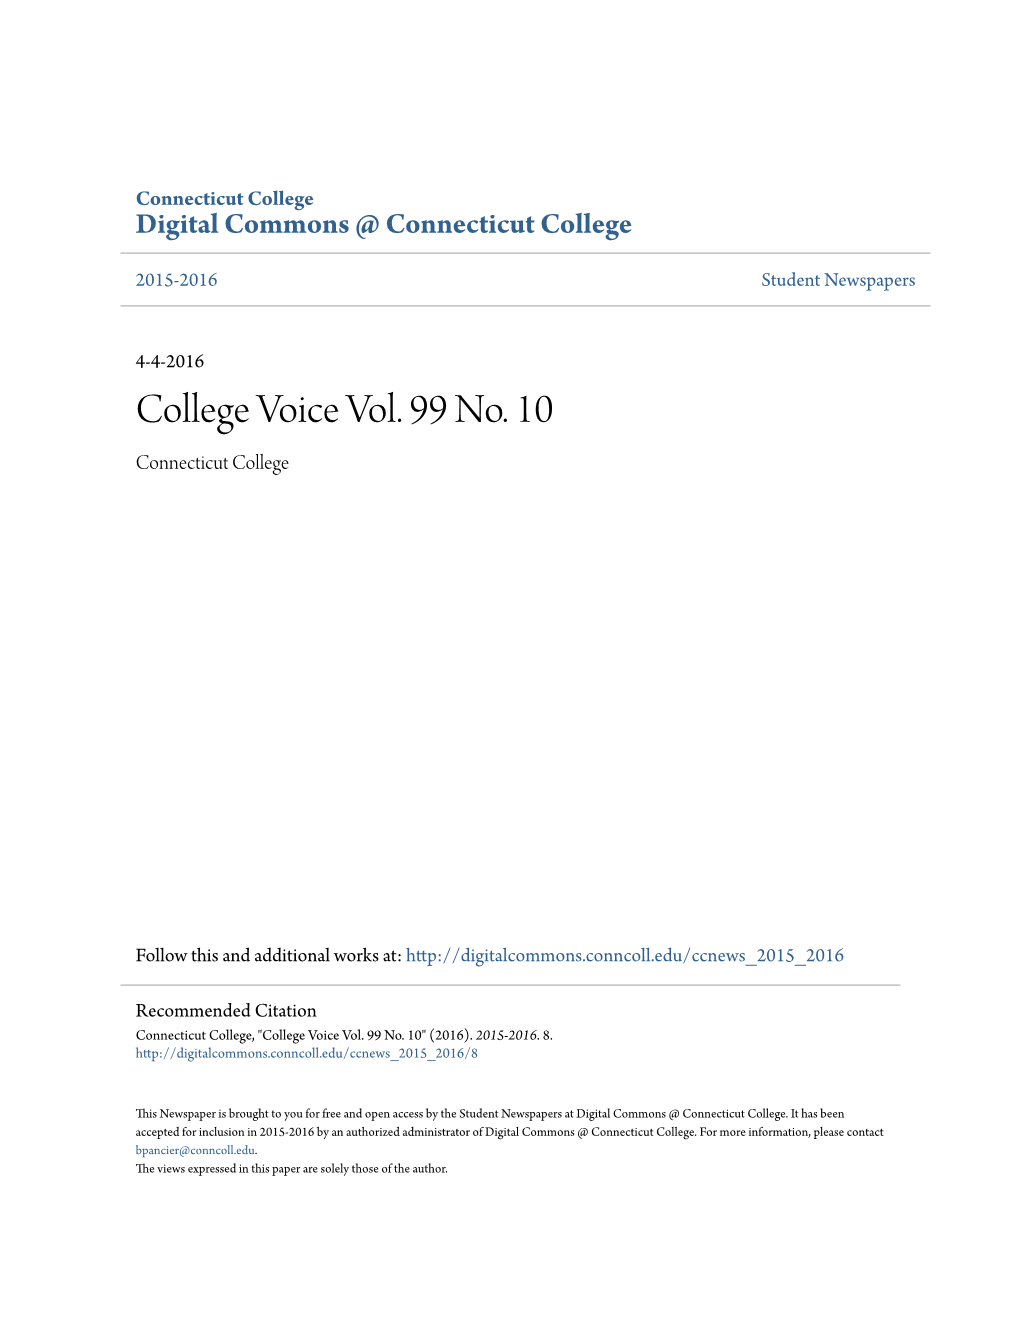 College Voice Vol. 99 No. 10 Connecticut College